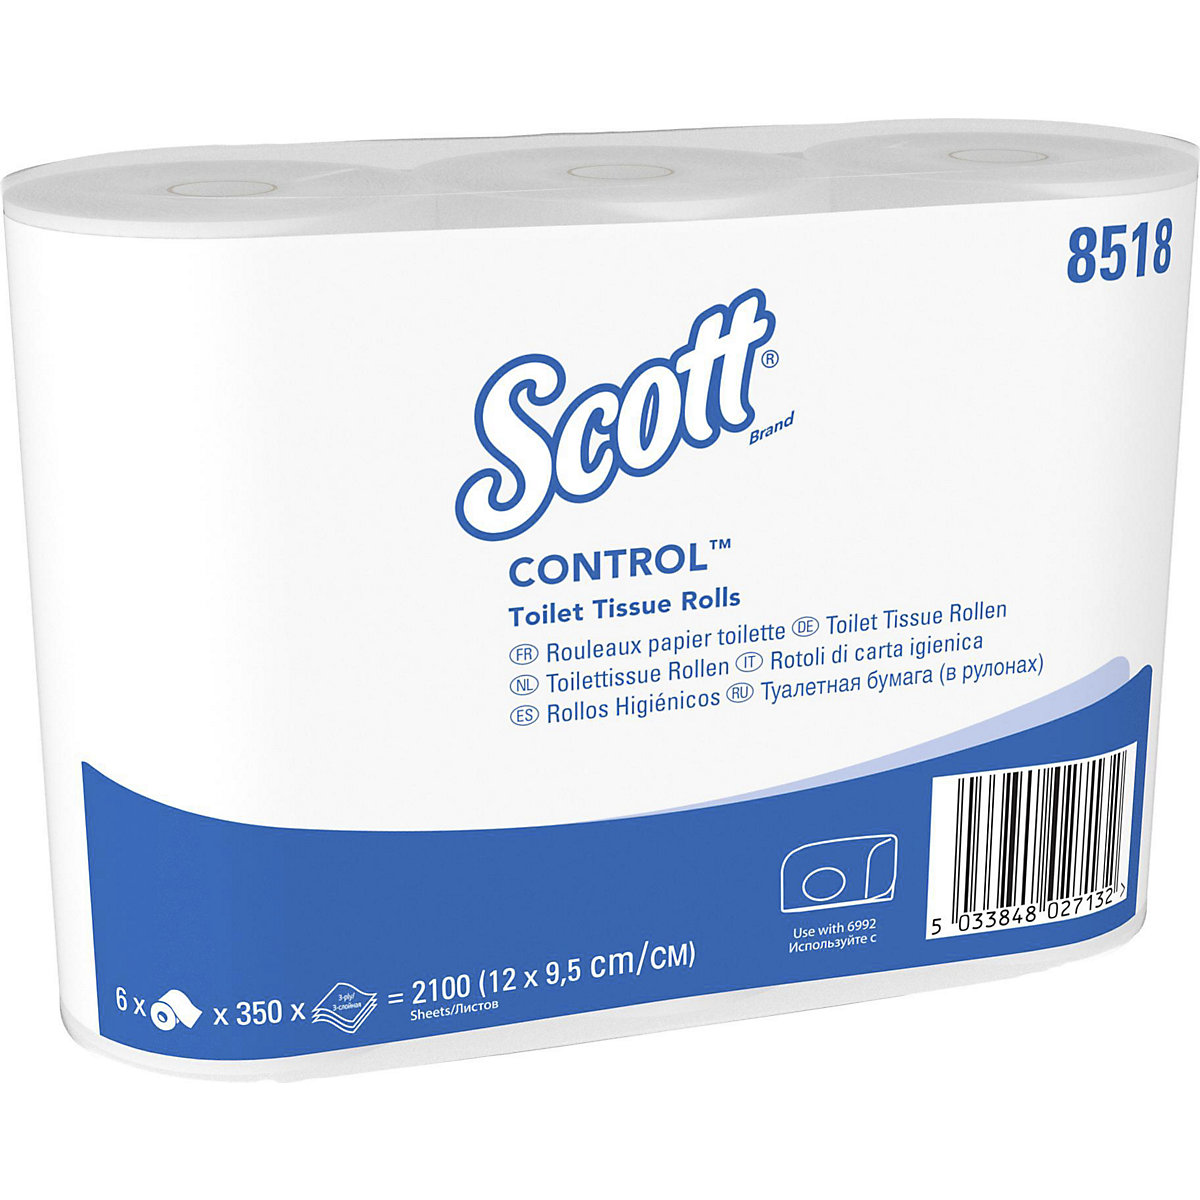 Papel higiénico Scott® CONTROL™ padrão - Kimberly-Clark